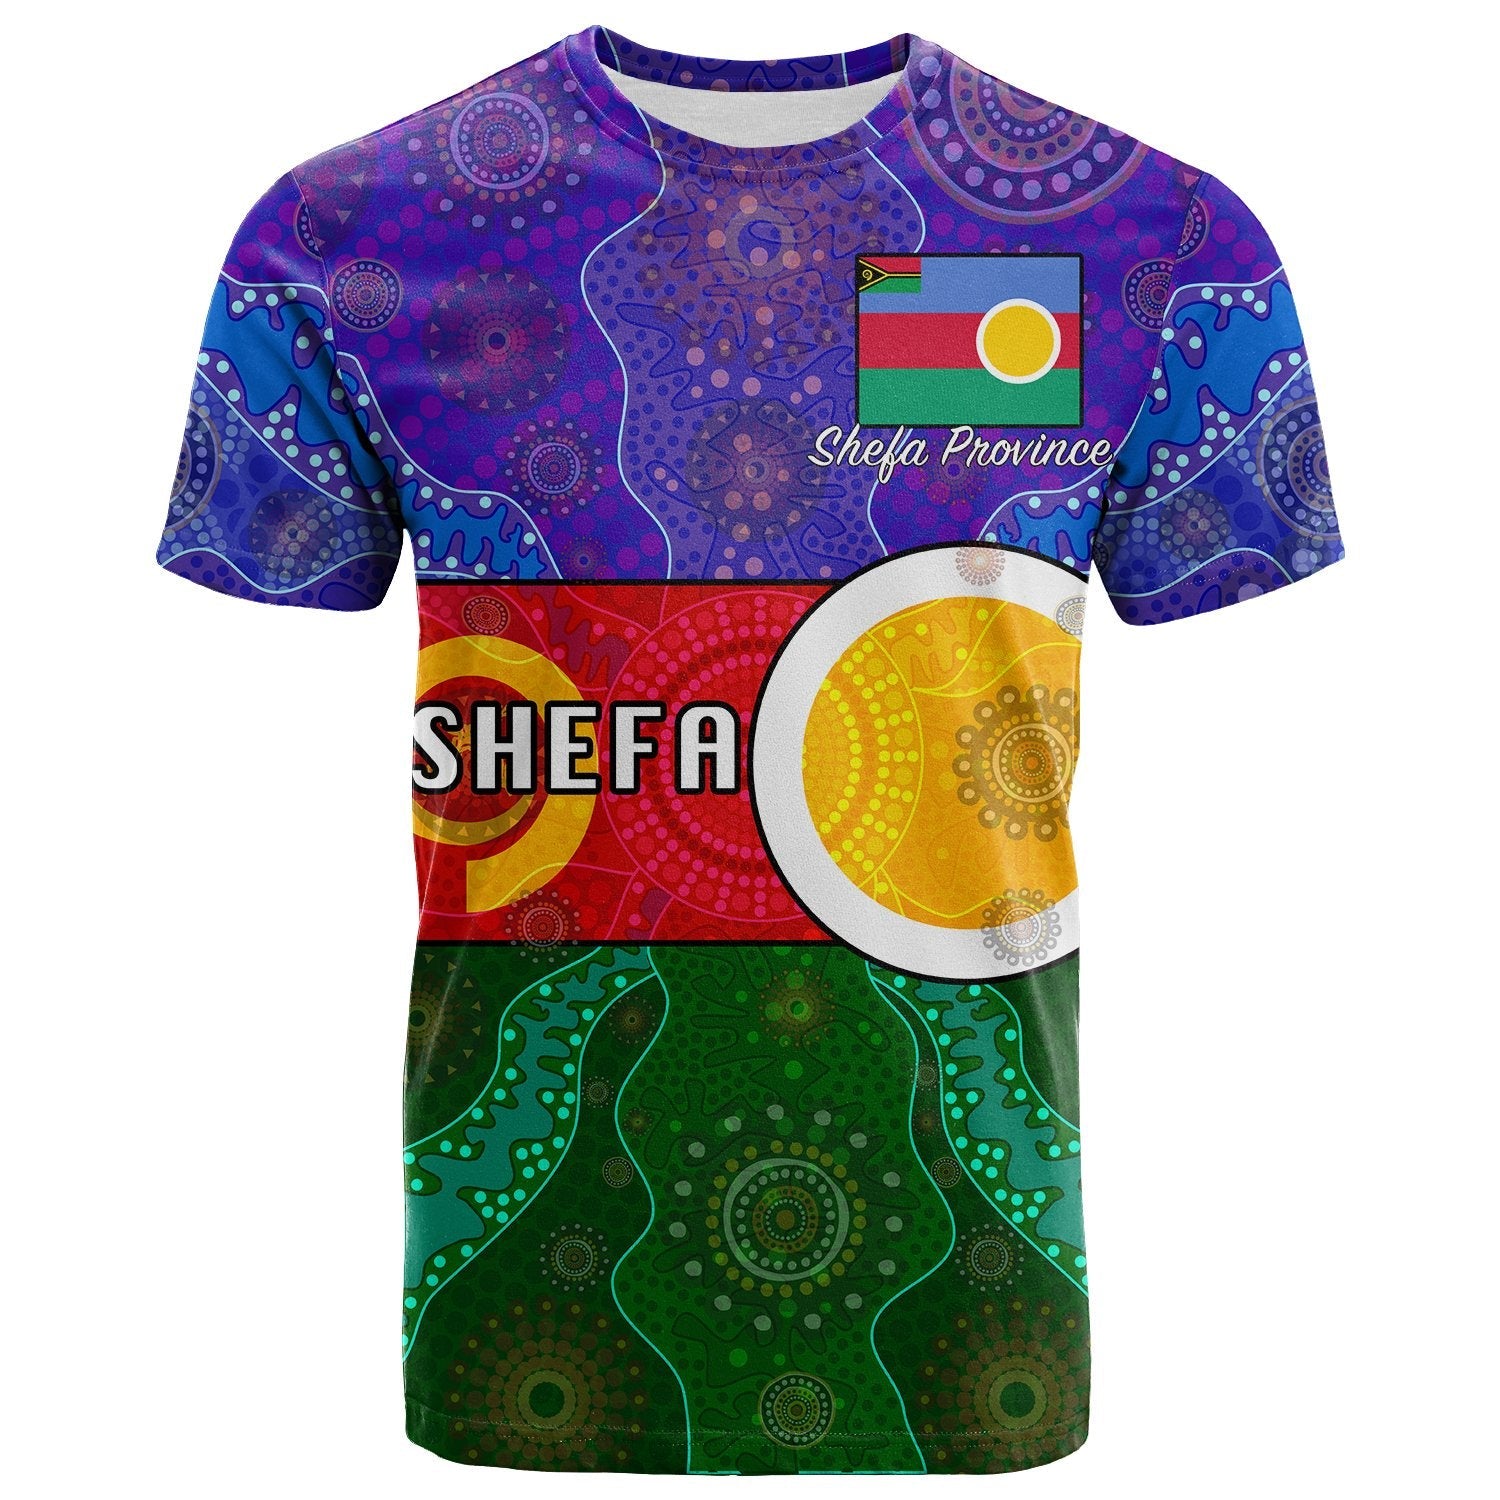 custcustom-personalied-shefa-province-t-shirt-aboriginal-patterns